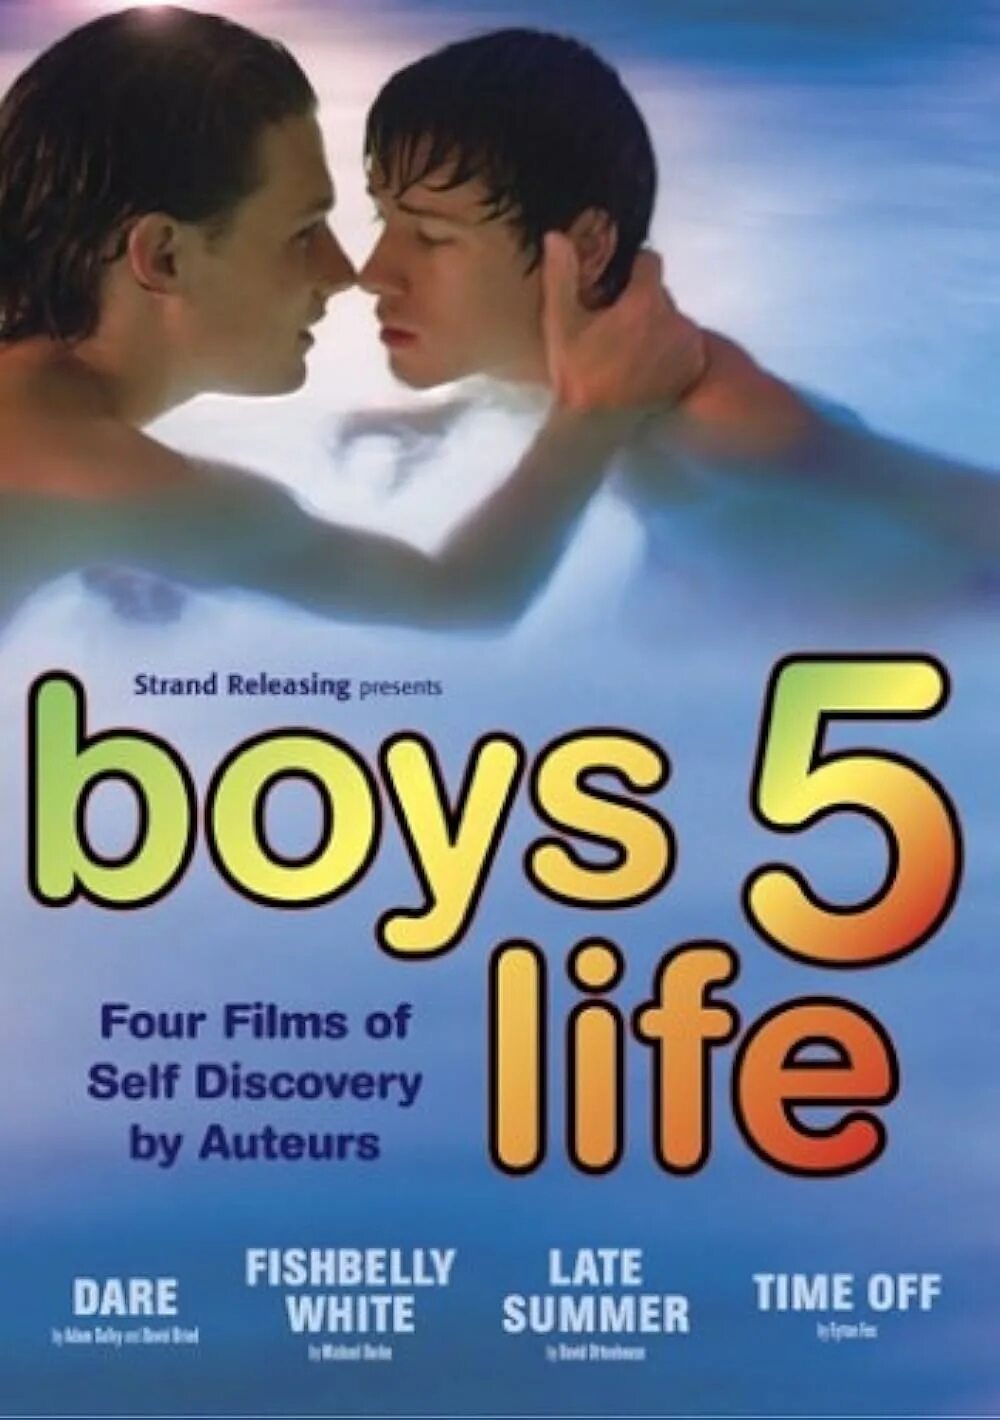 This is boys life. Жизнь парней 5 2006. Fishbelly White 1998. Жизнь парней 2.